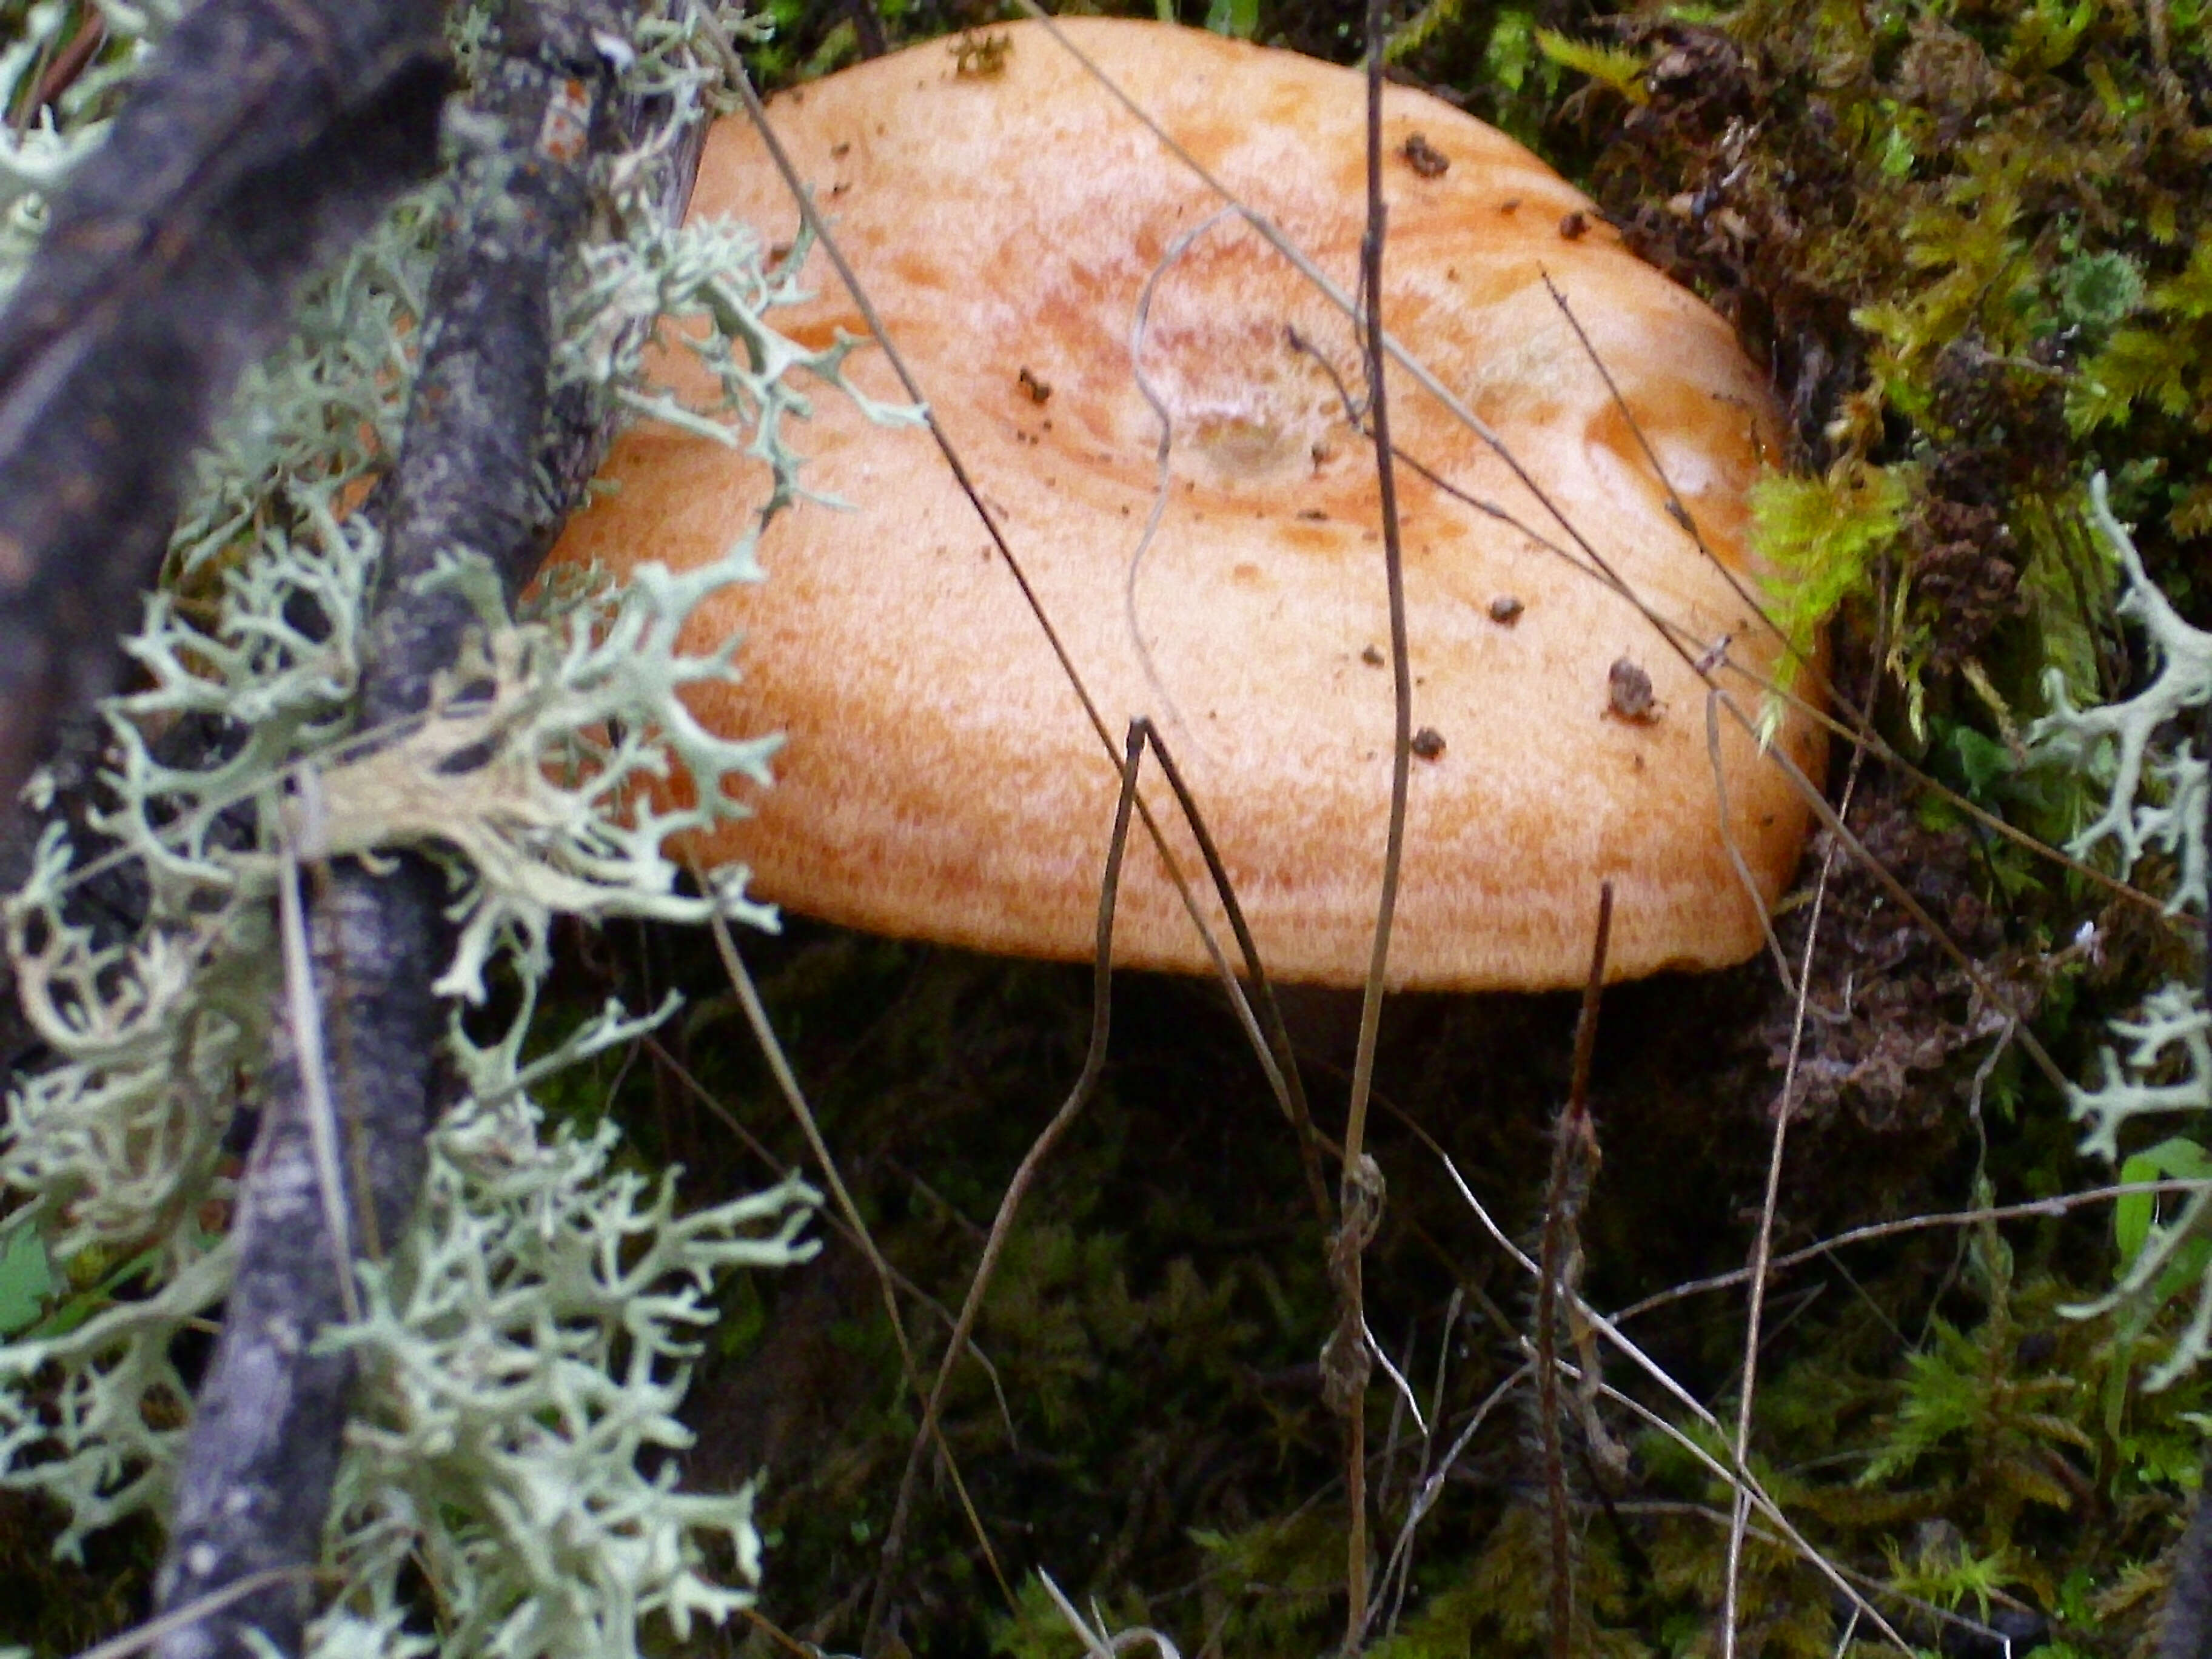 Image of Red Pine Mushroom